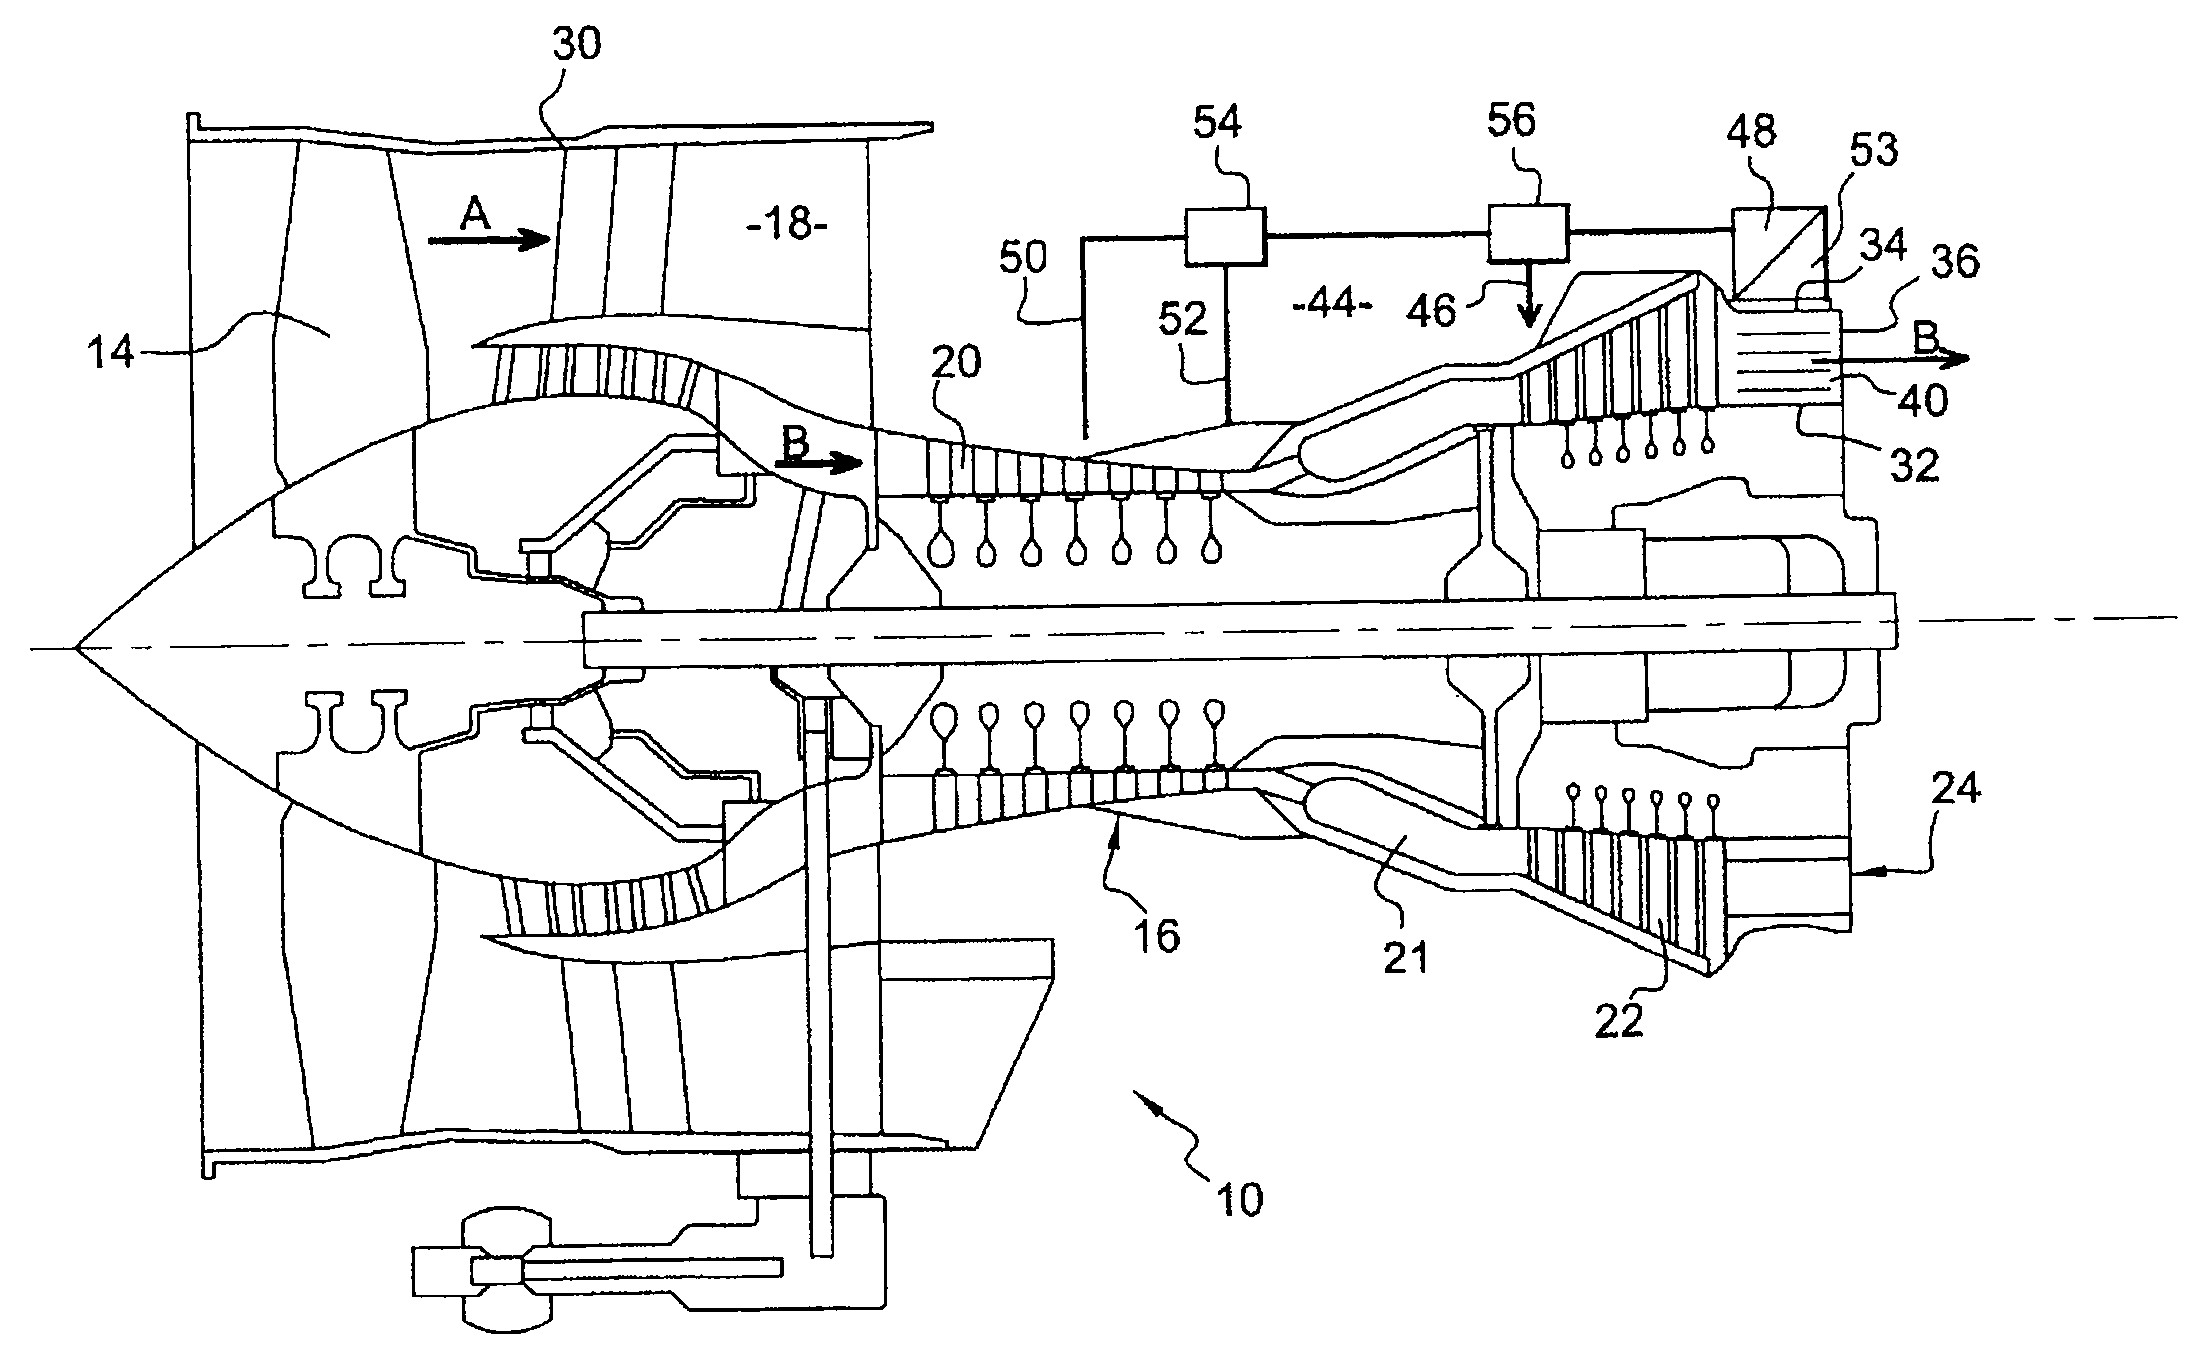 Component ventilation and pressurization in a turbomachine